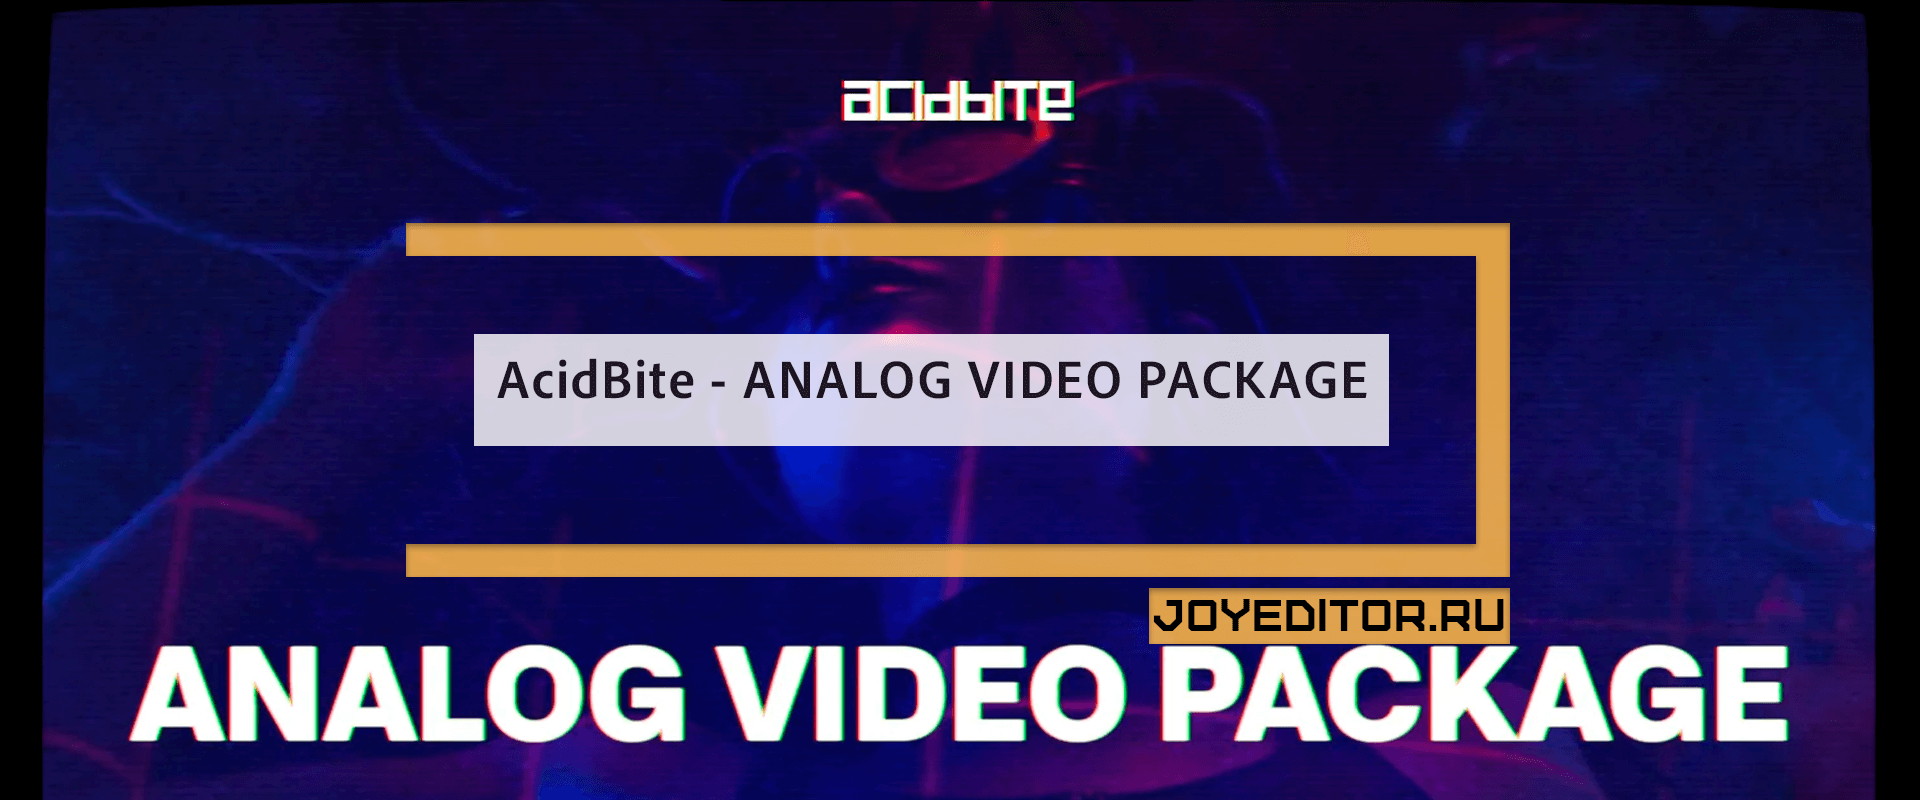 AcidBite - ANALOG VIDEO PACKAGE